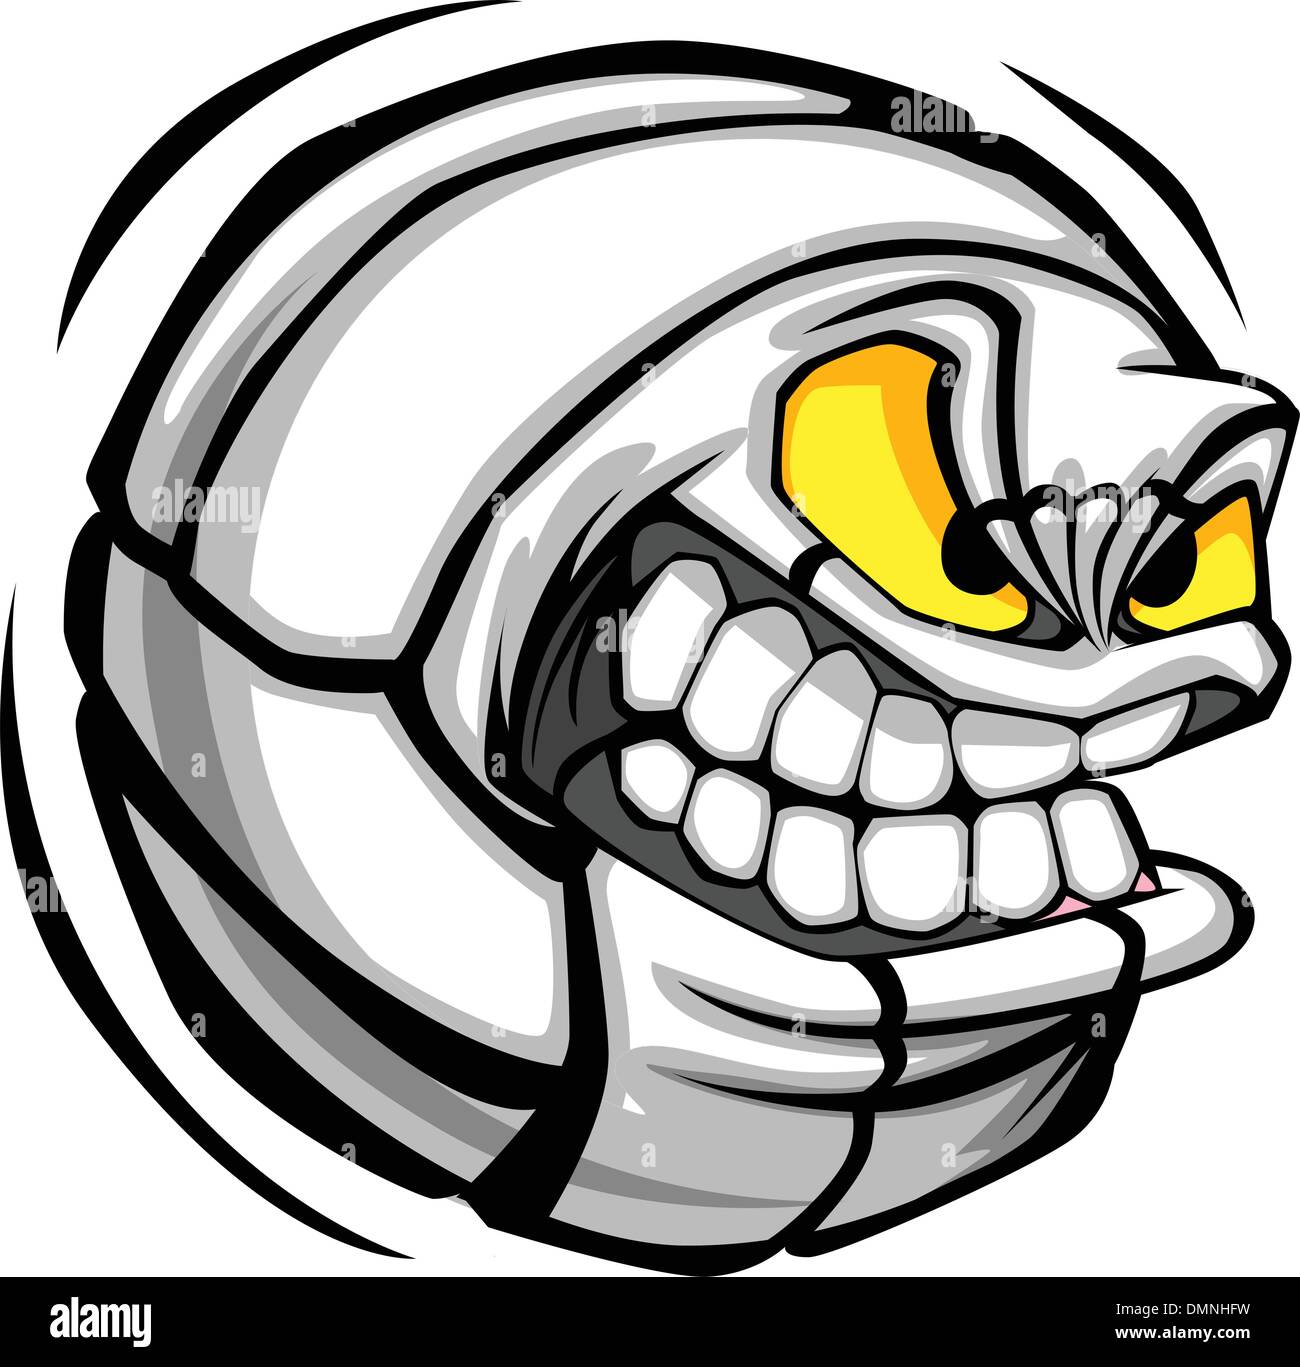 Volleyball Ball Face Cartoon Vector Image Stock Vector Image & Art - Alamy